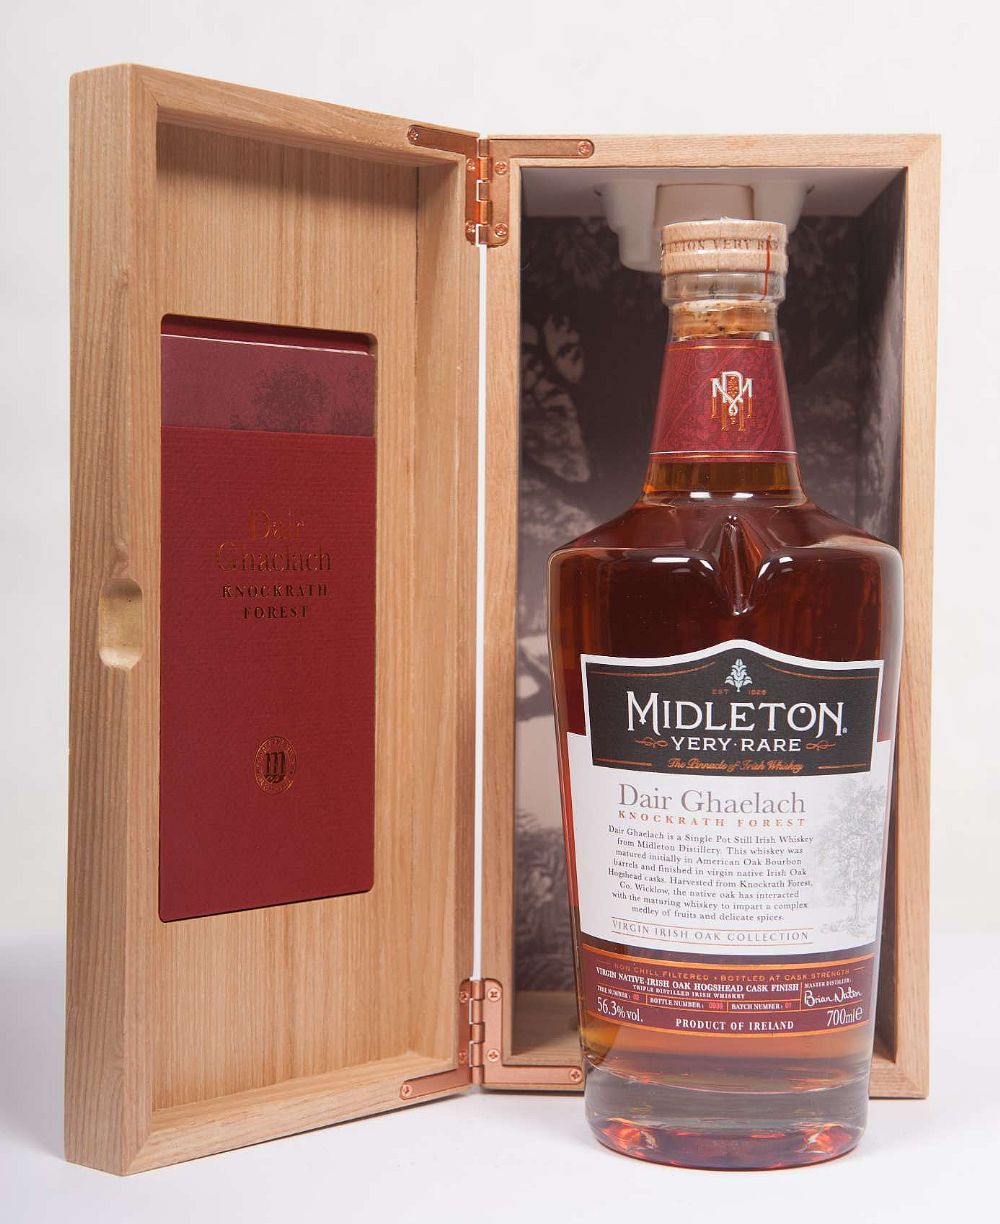 Midleton Dair Ghaelach Knockrath Forest set (7 bottles)